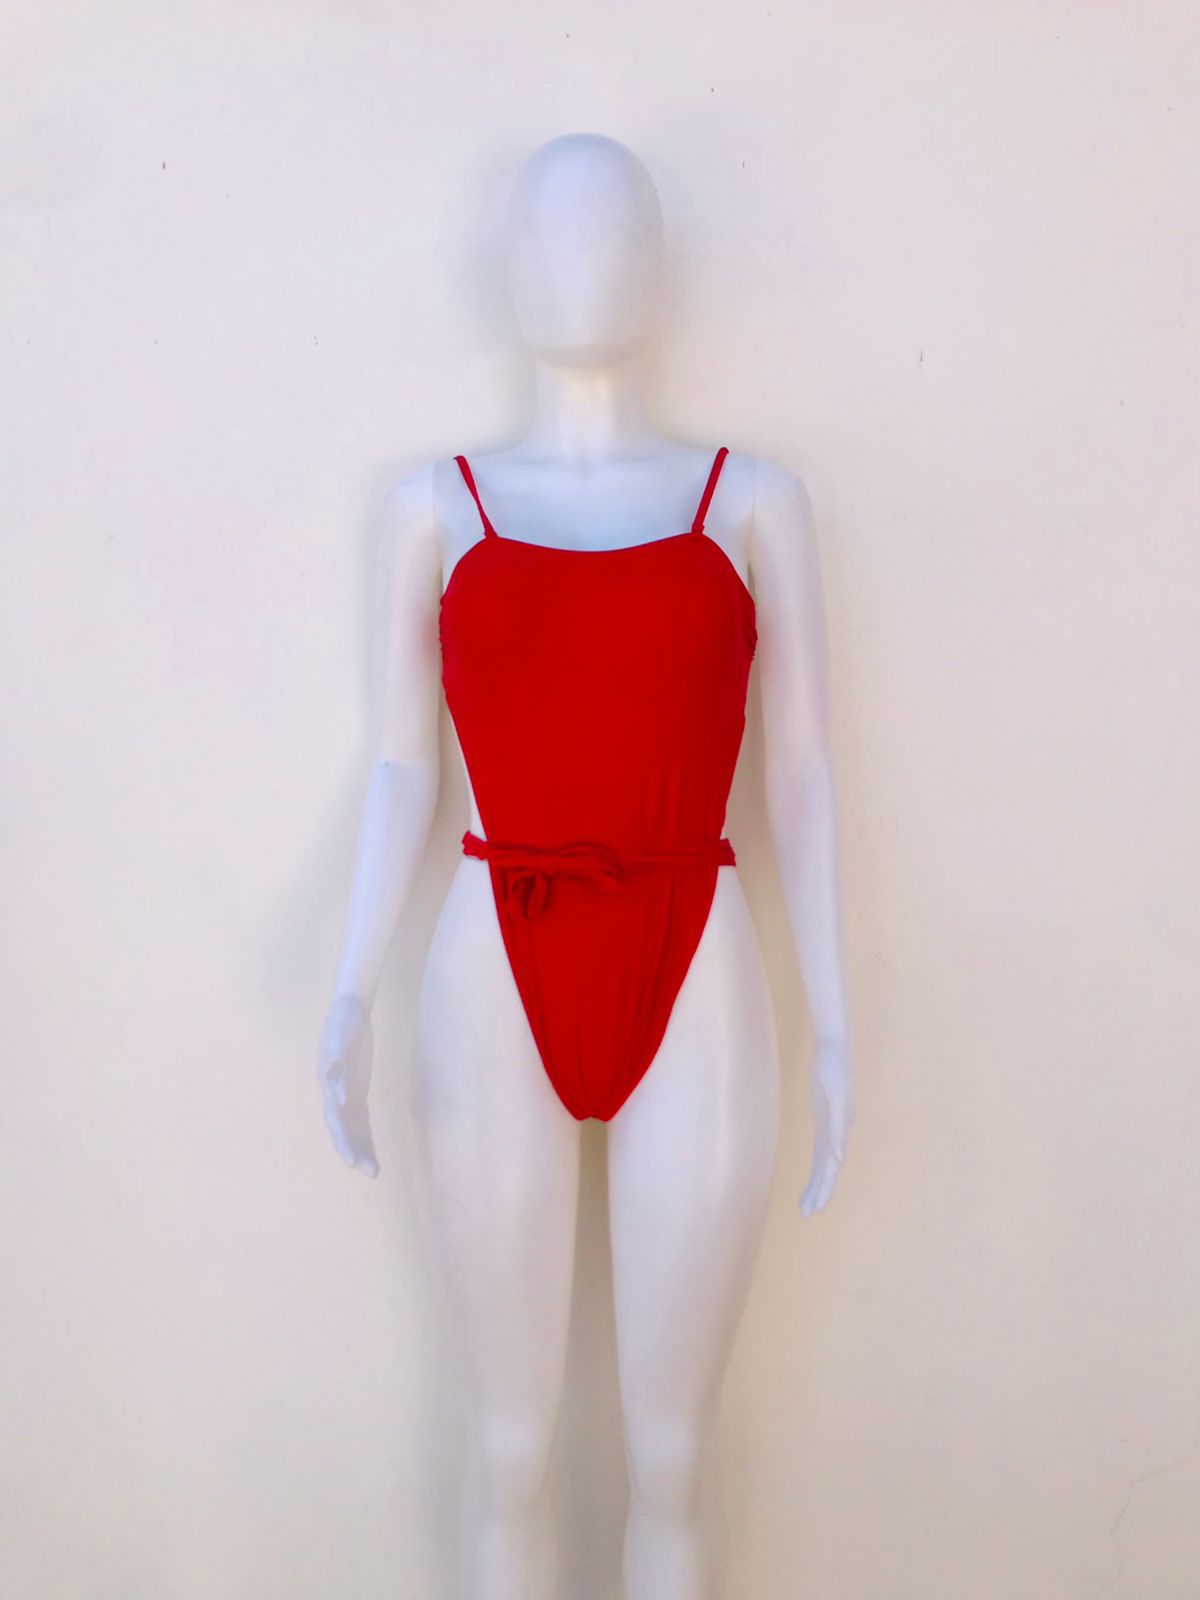 Biquini Mermaid Swimwear original, rojo intenso liso; con lazo ajustable en el centro.